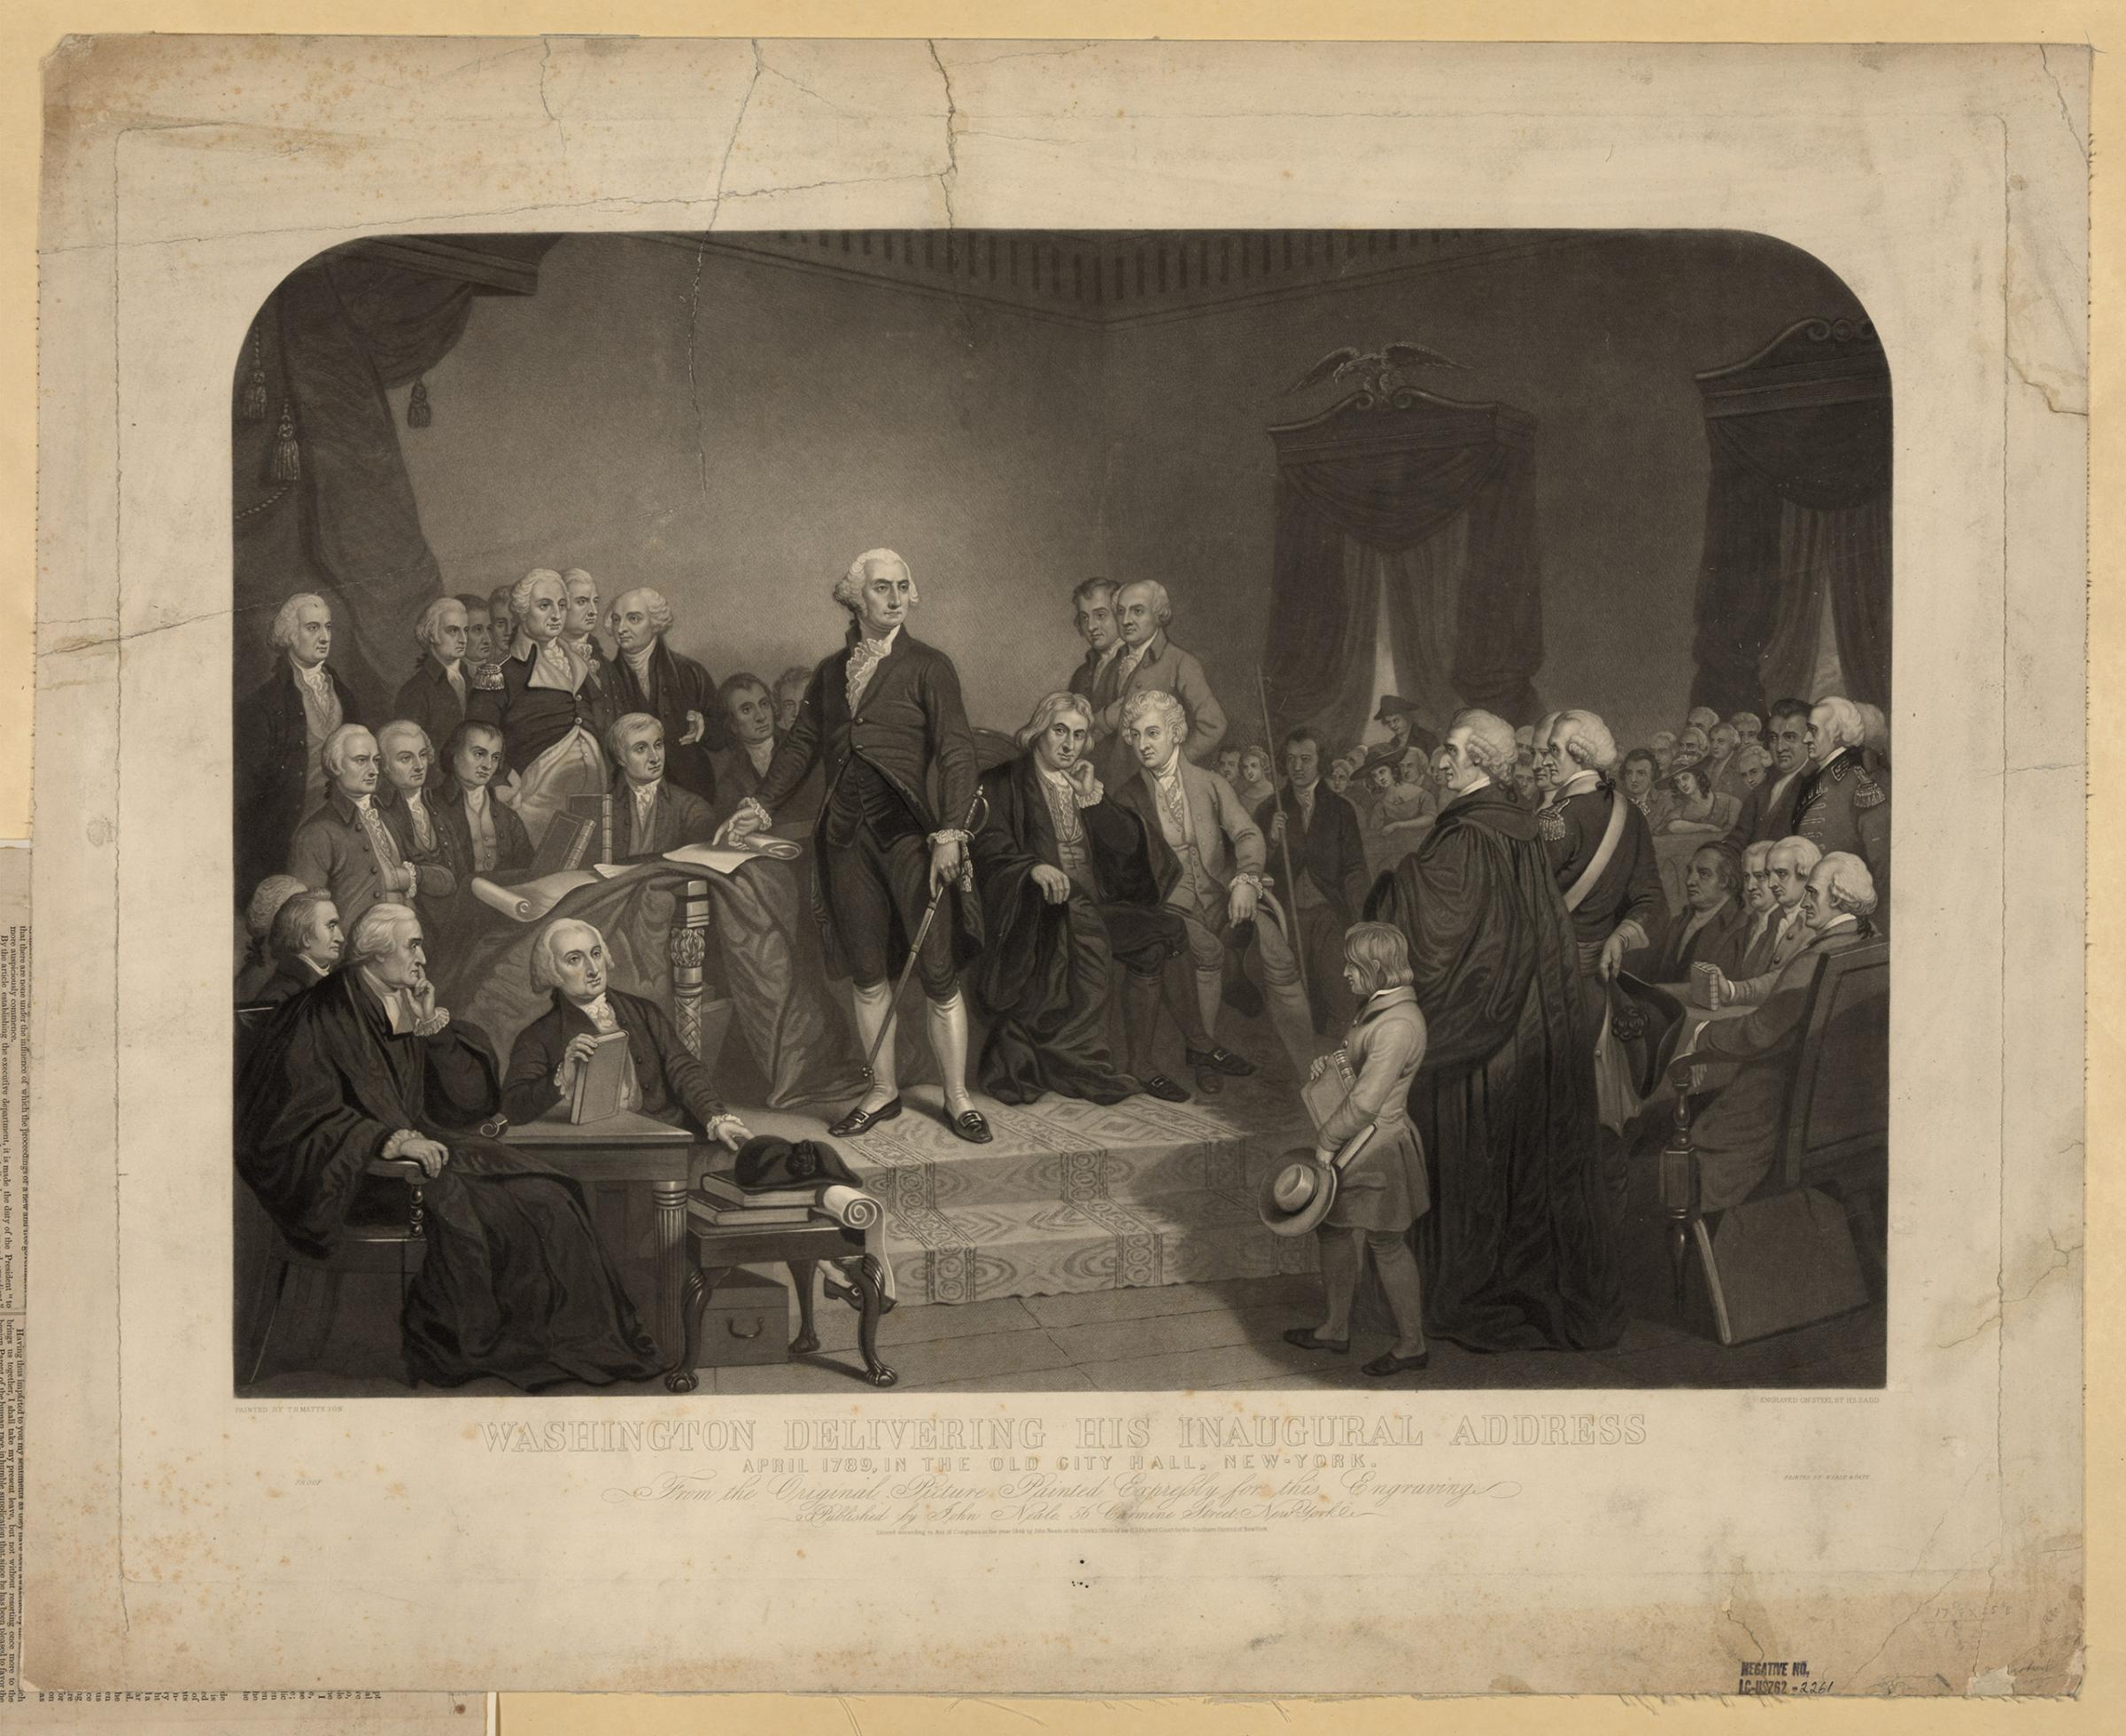 George Washington delivering his inaugural address, 1789.